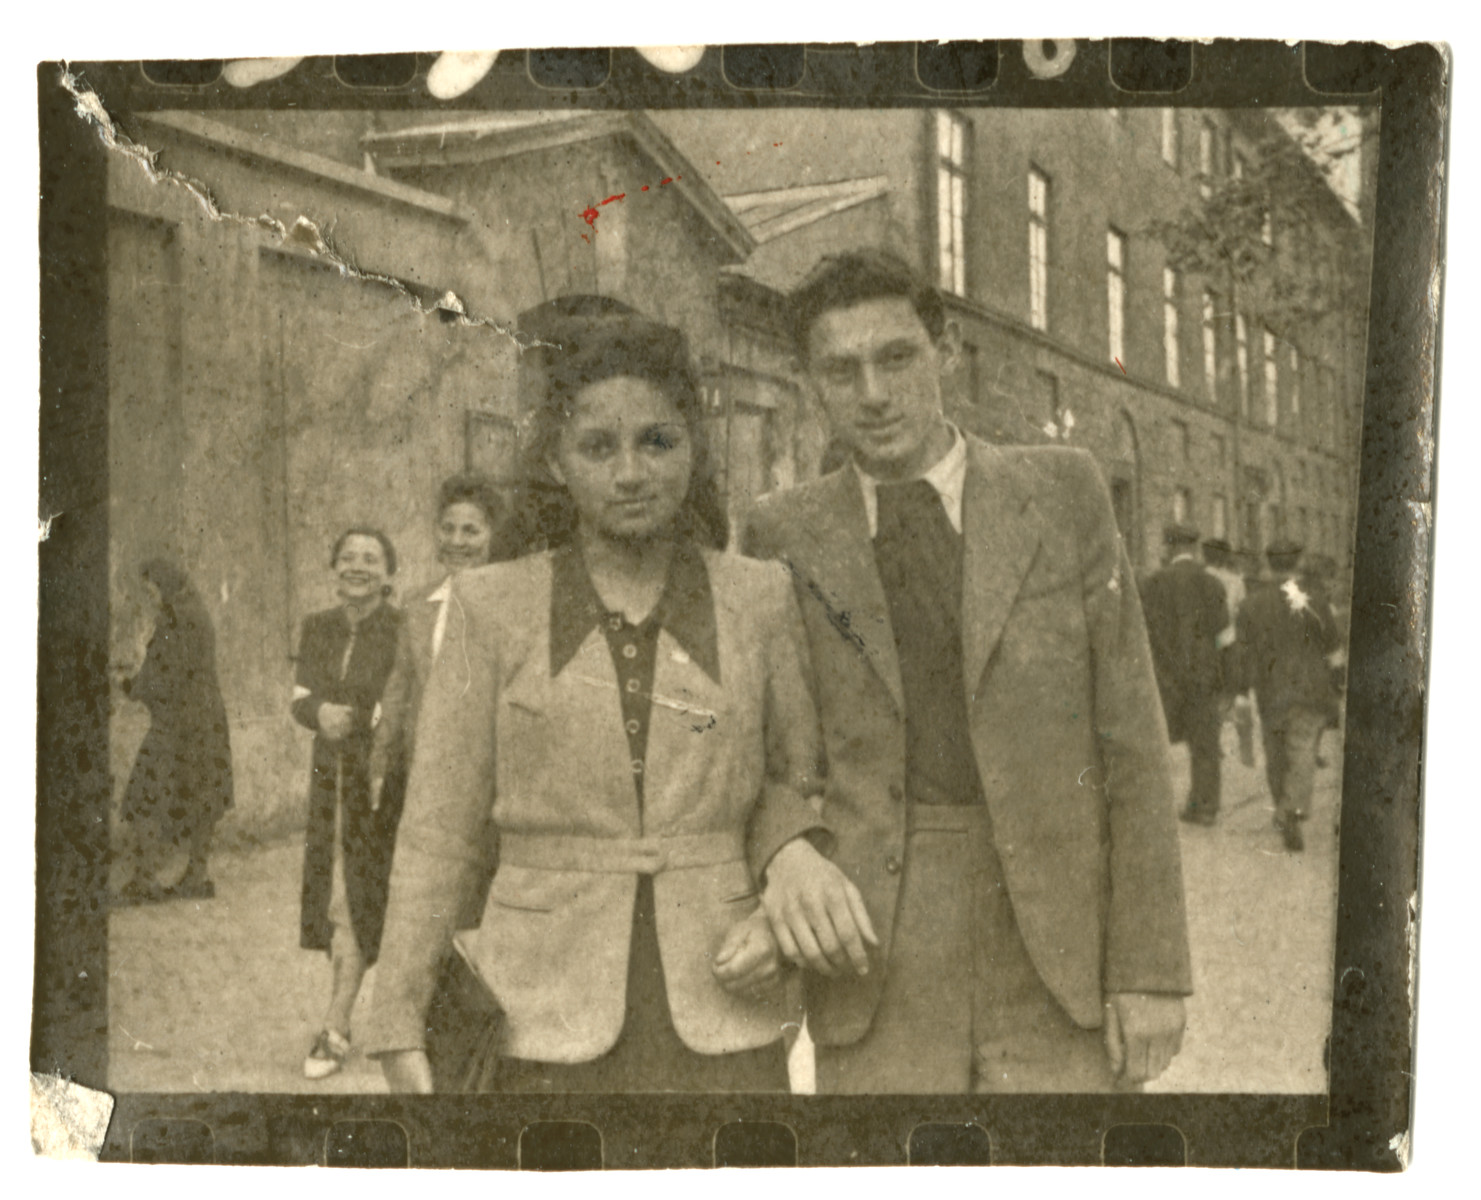 Miriam Wattenberg walks down a street in the Warsaw ghetto arm in arm with her with boyfriend Romek Kowalski.